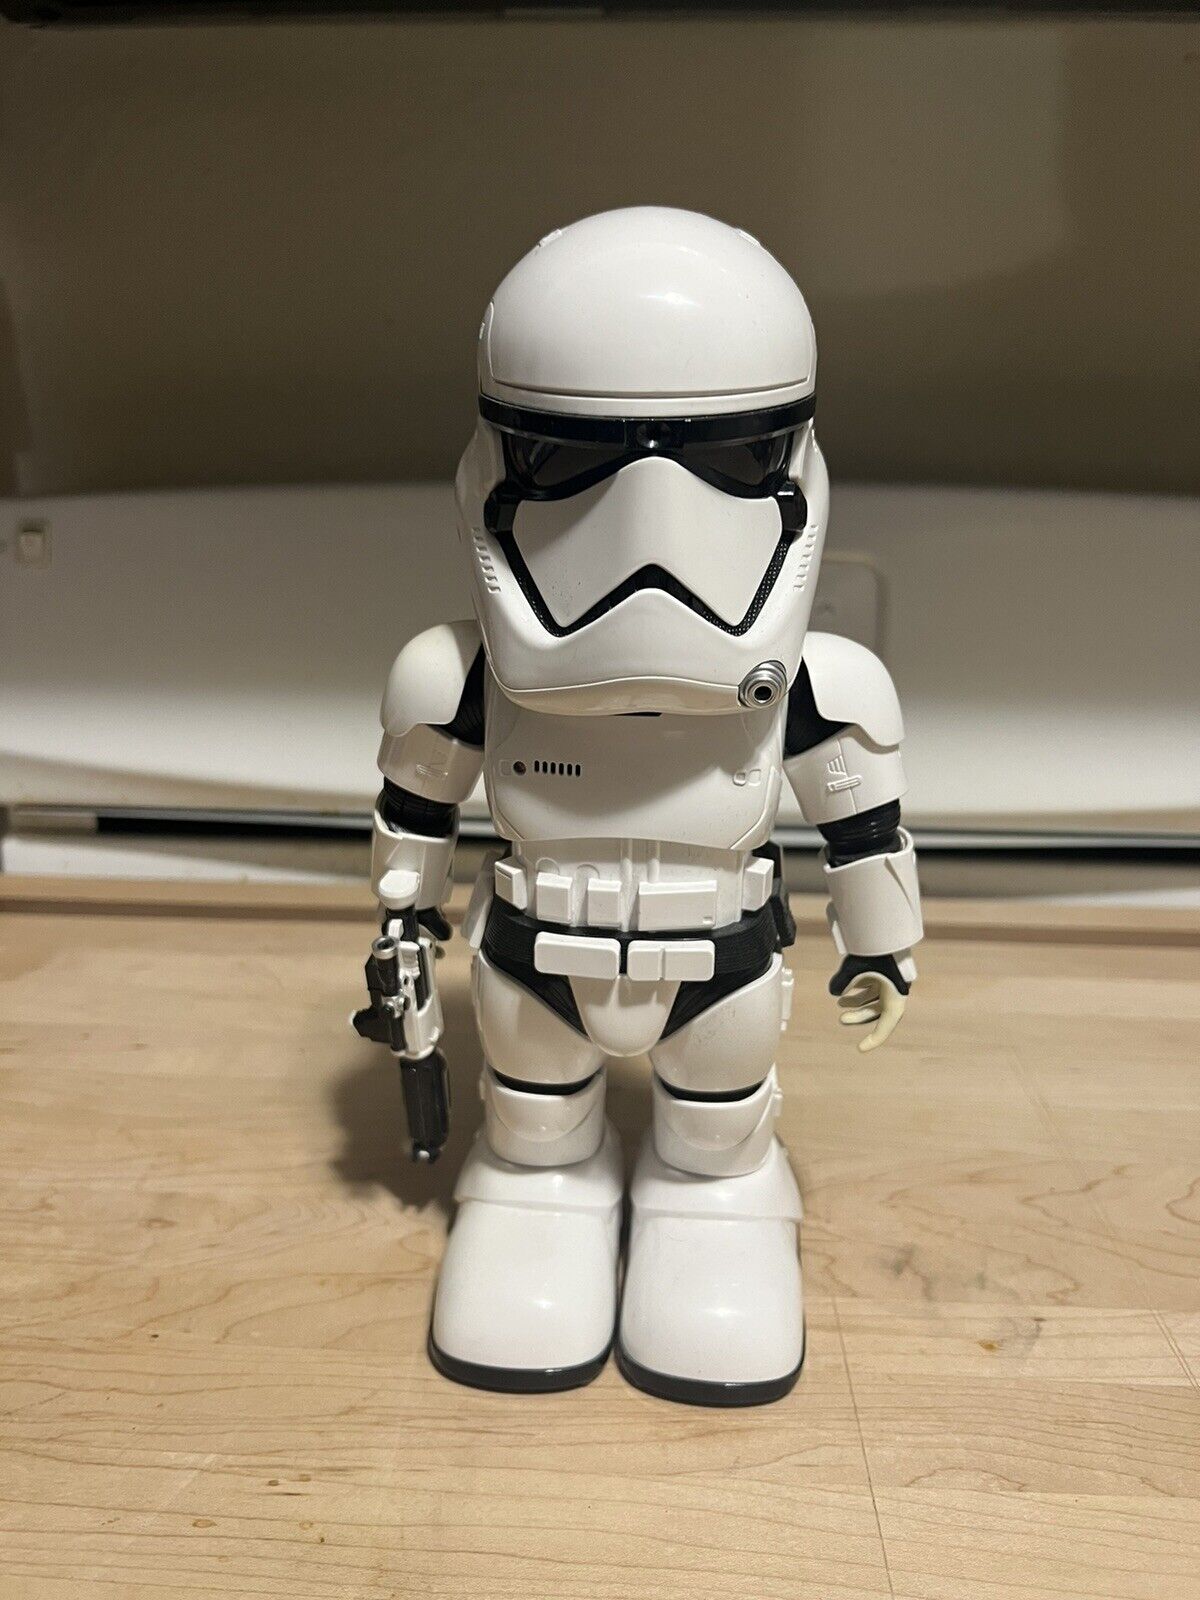 Star Wars First Order Stromtrooper Robot with Companion App